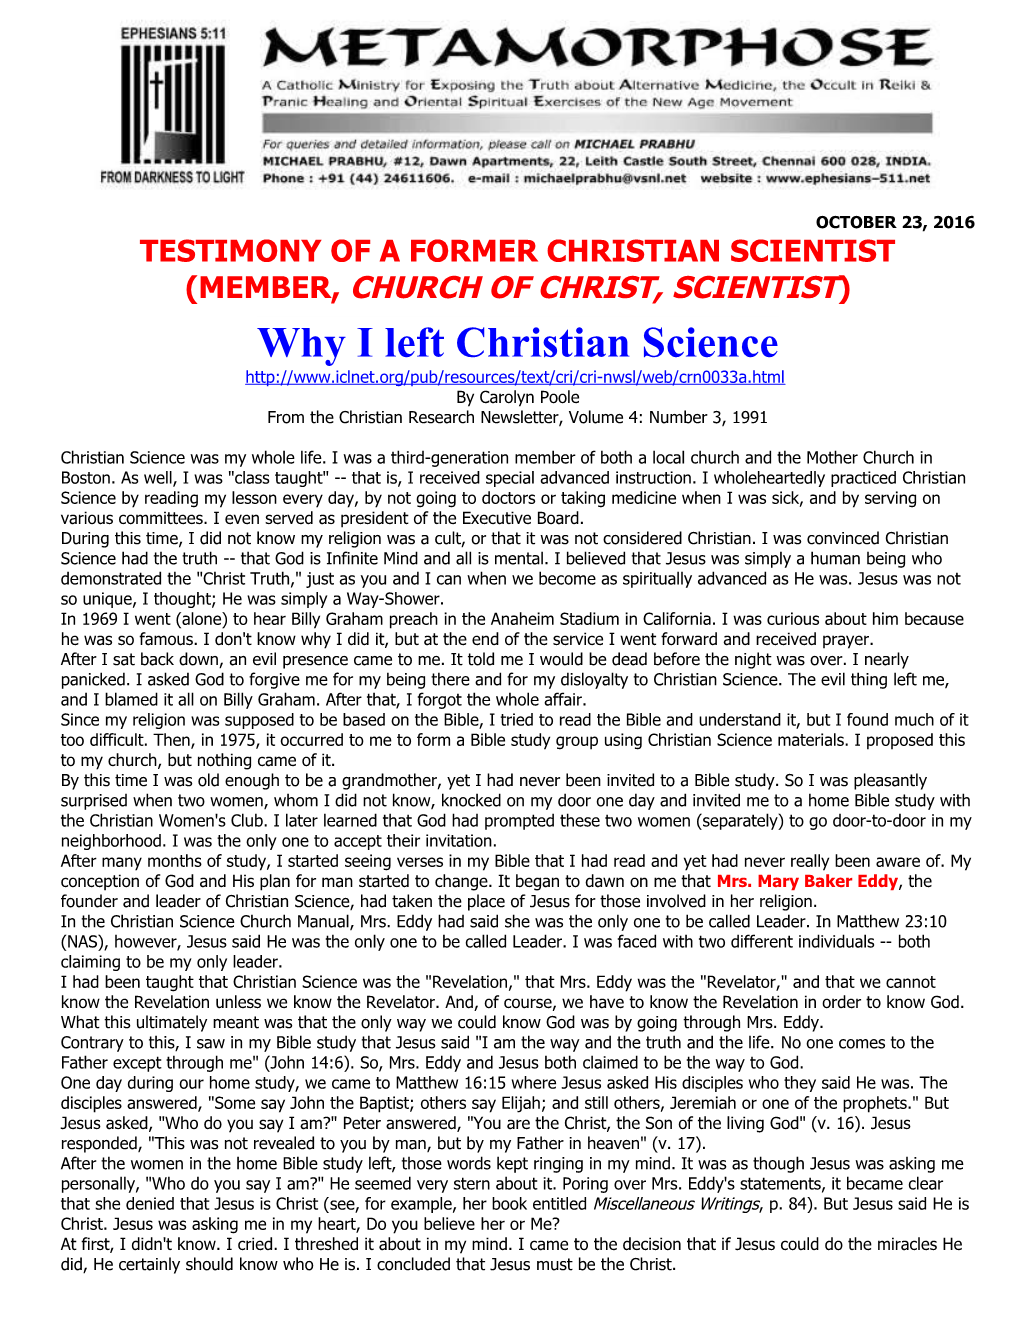 Testimony of a Former Christian Scientist